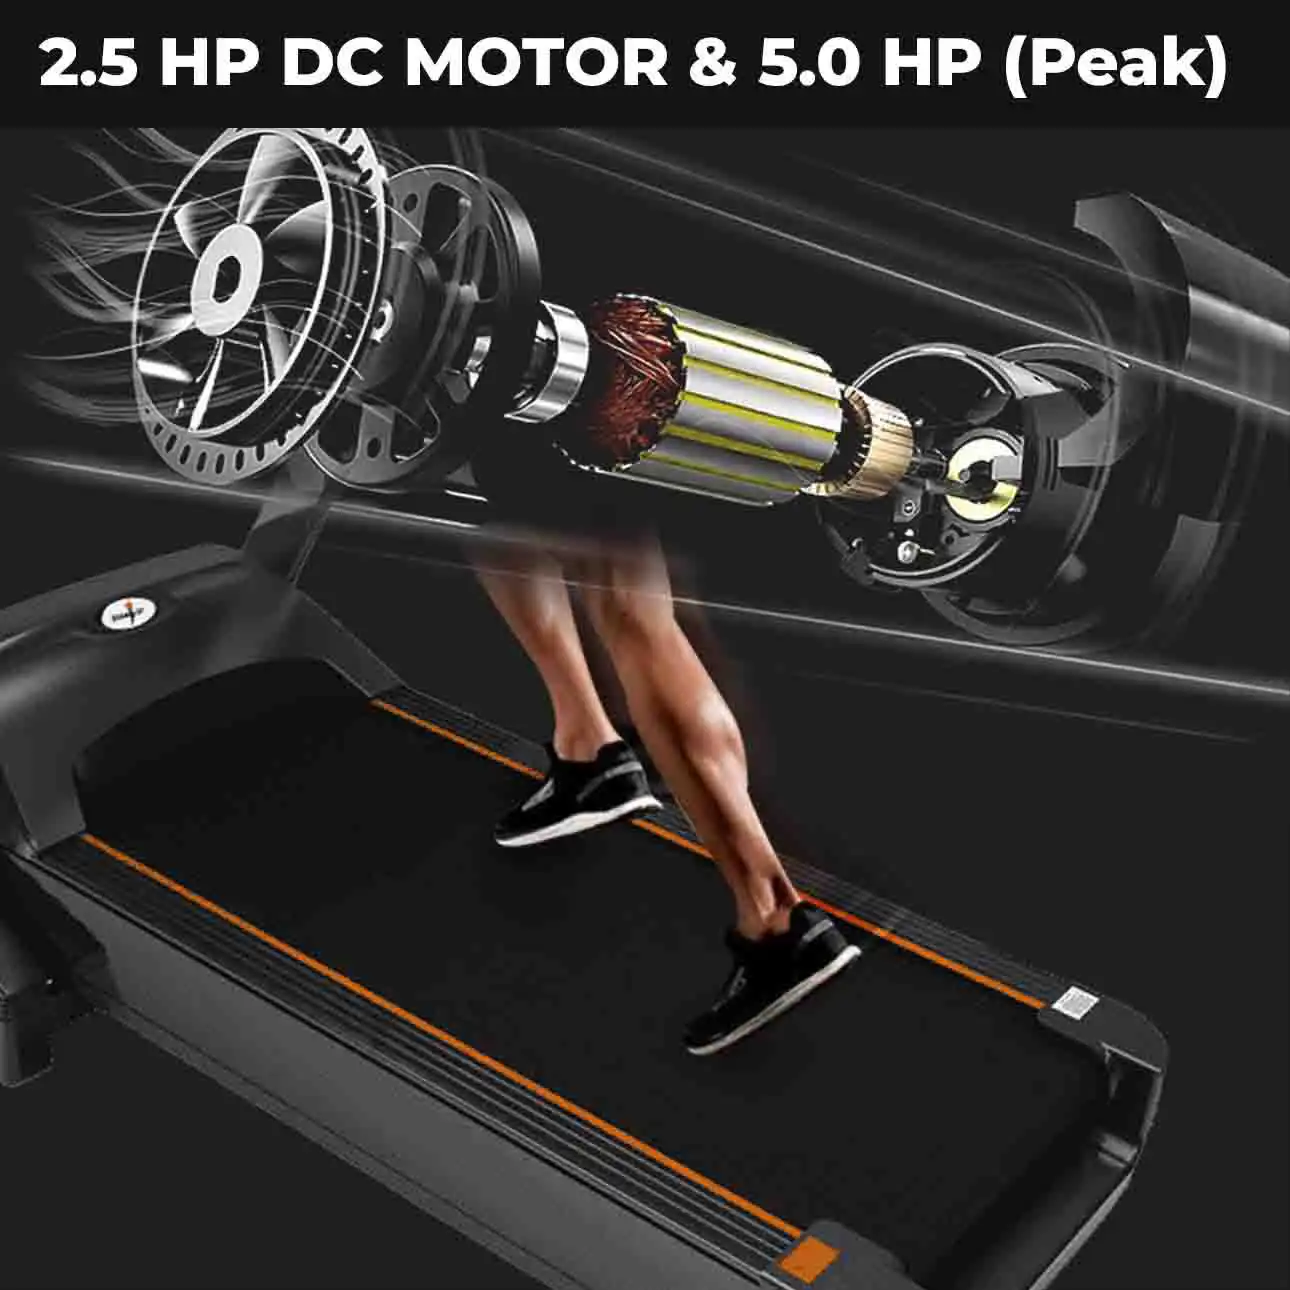 Durafit Champion Treadmill with 2.5 HP DC Motor